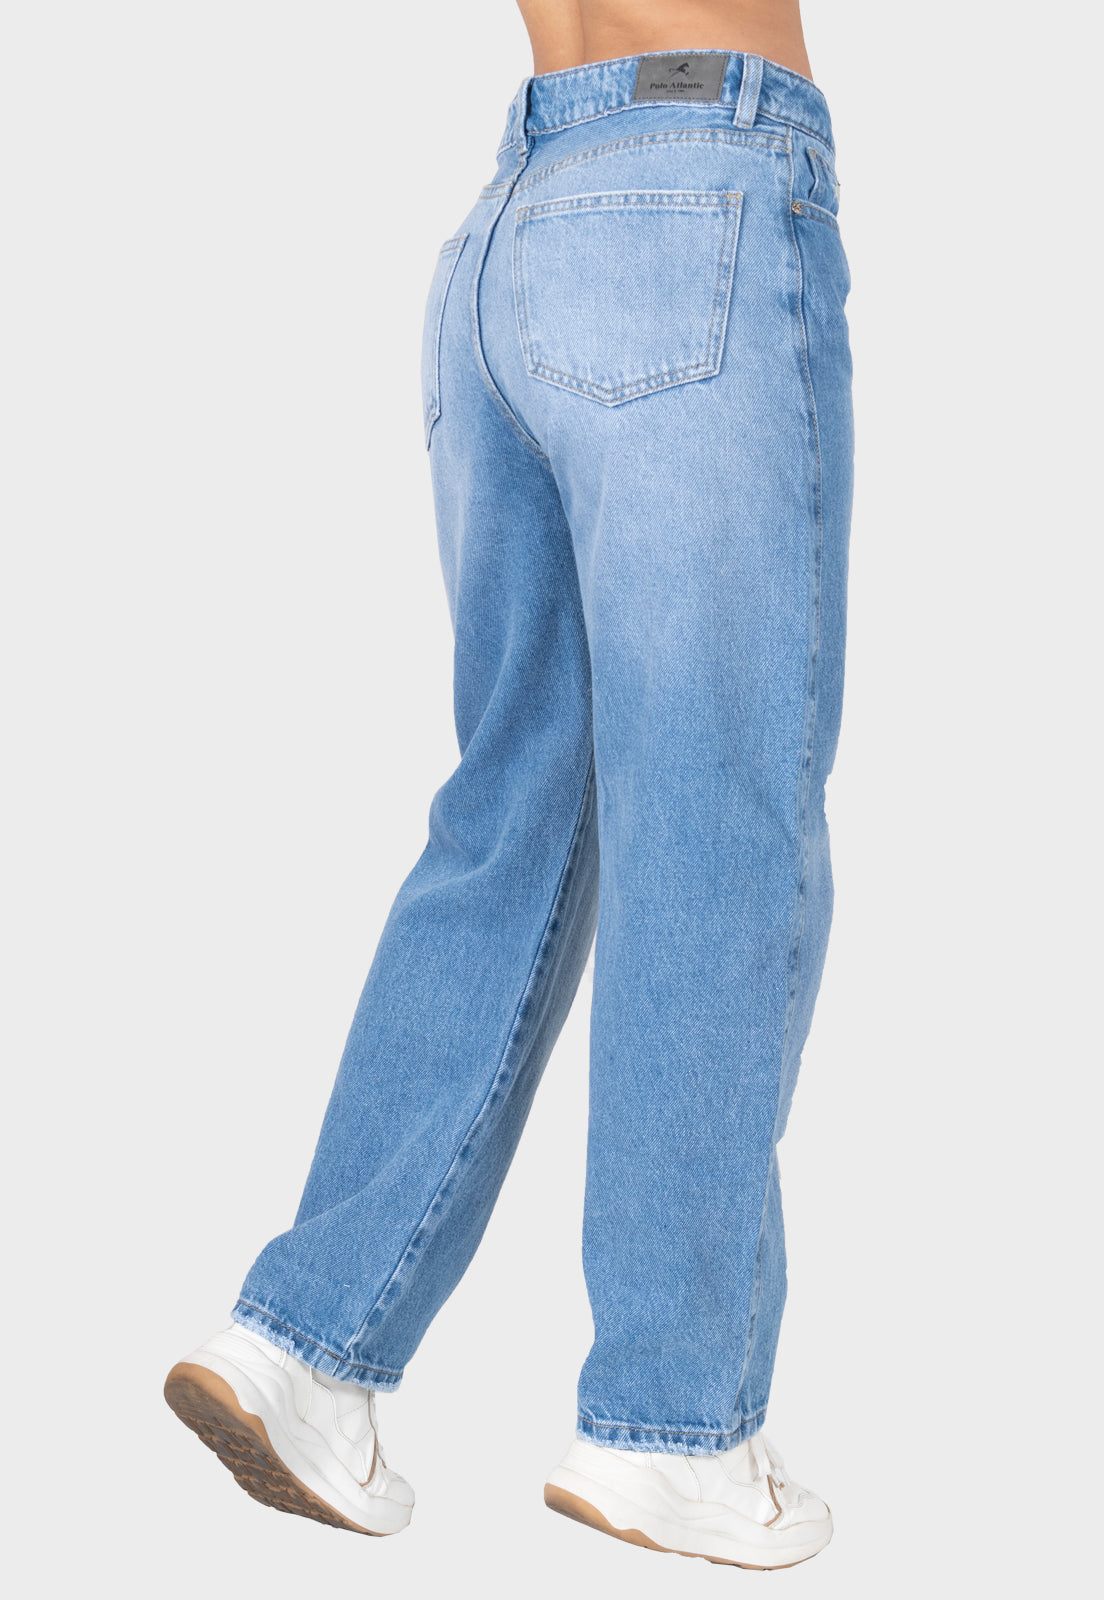 Pantalon jean straight cropped azul para mujer